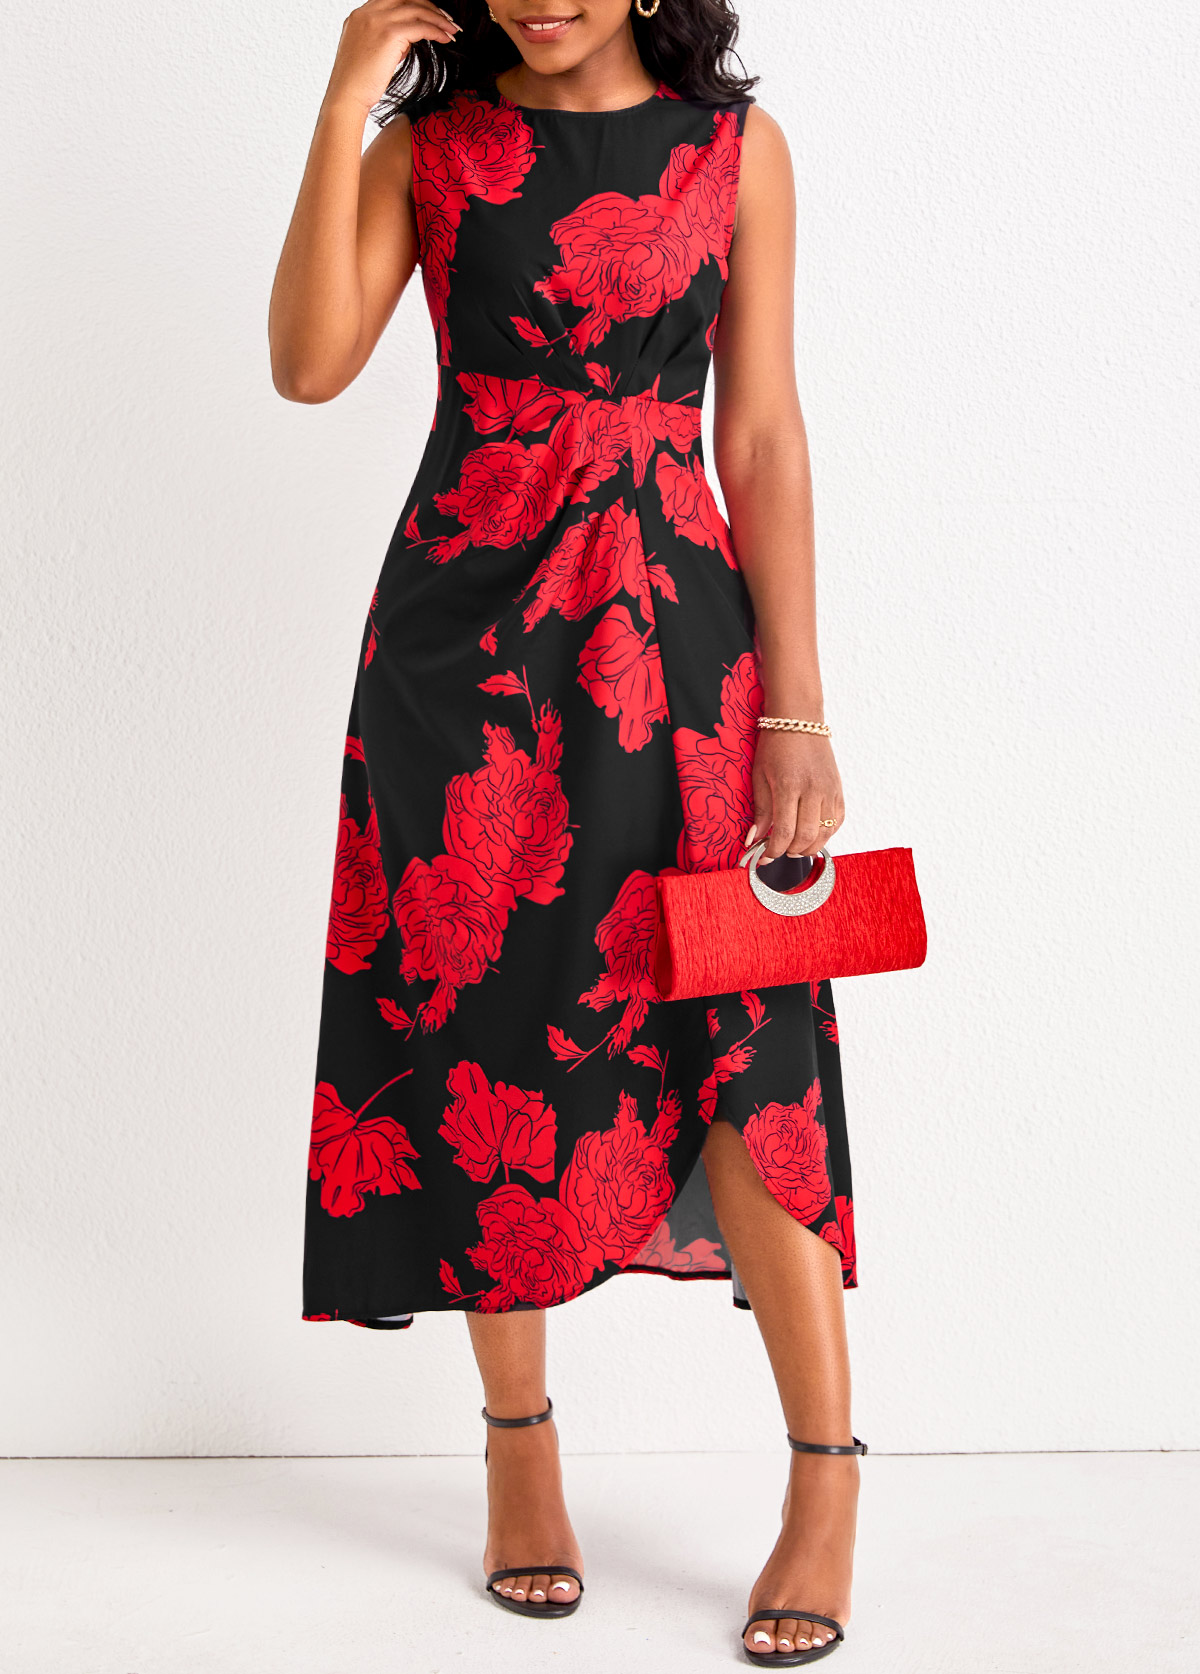 Floral Print Asymmetry Red Round Neck Sleeveless Dress